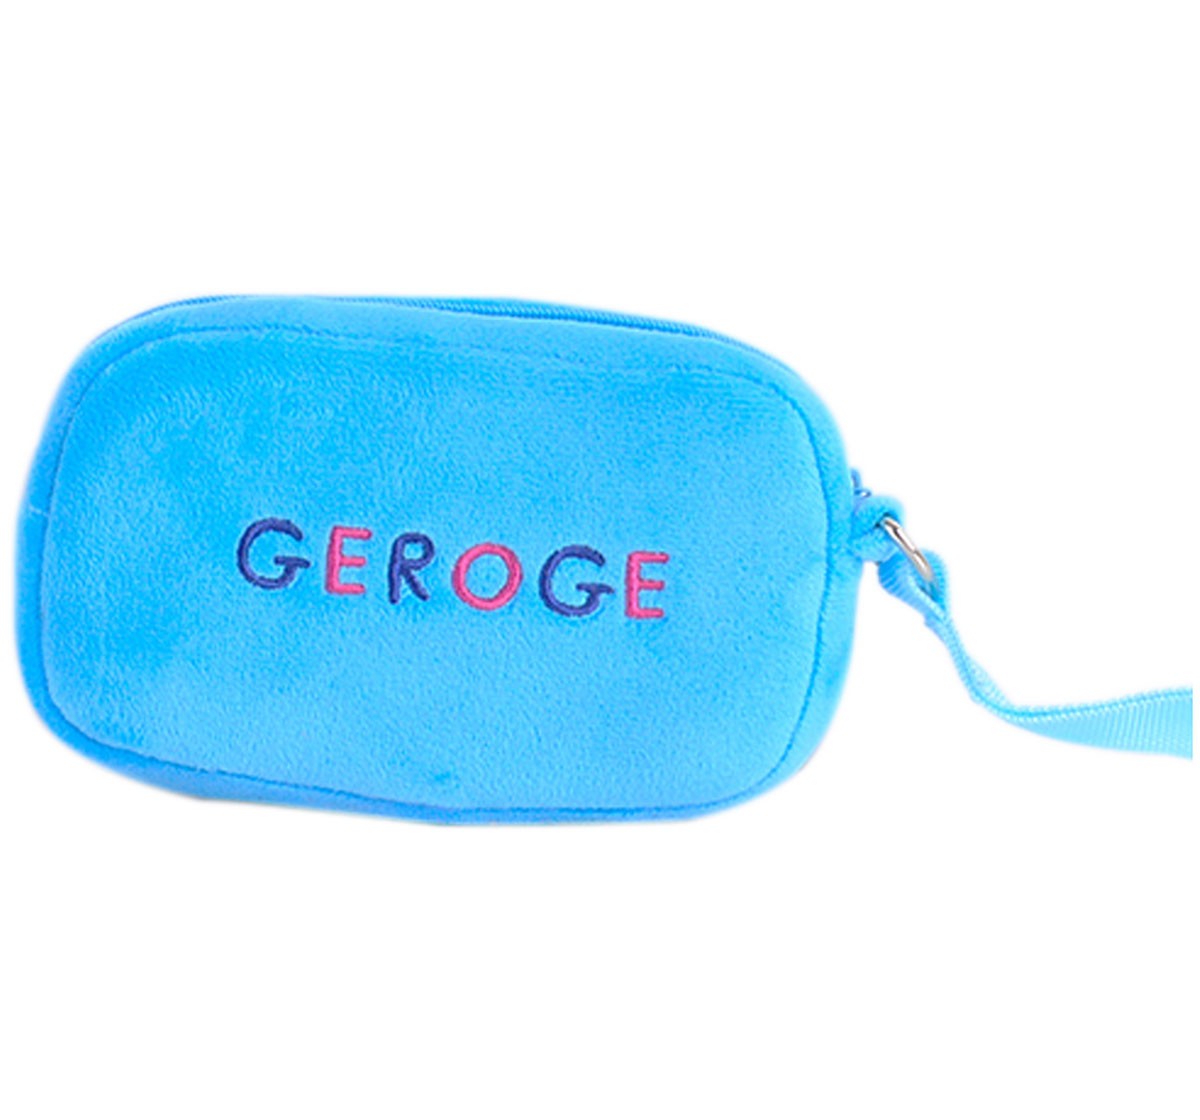 George Pig Blue Plush Toy Wallet, 0M+ (Multicolor)